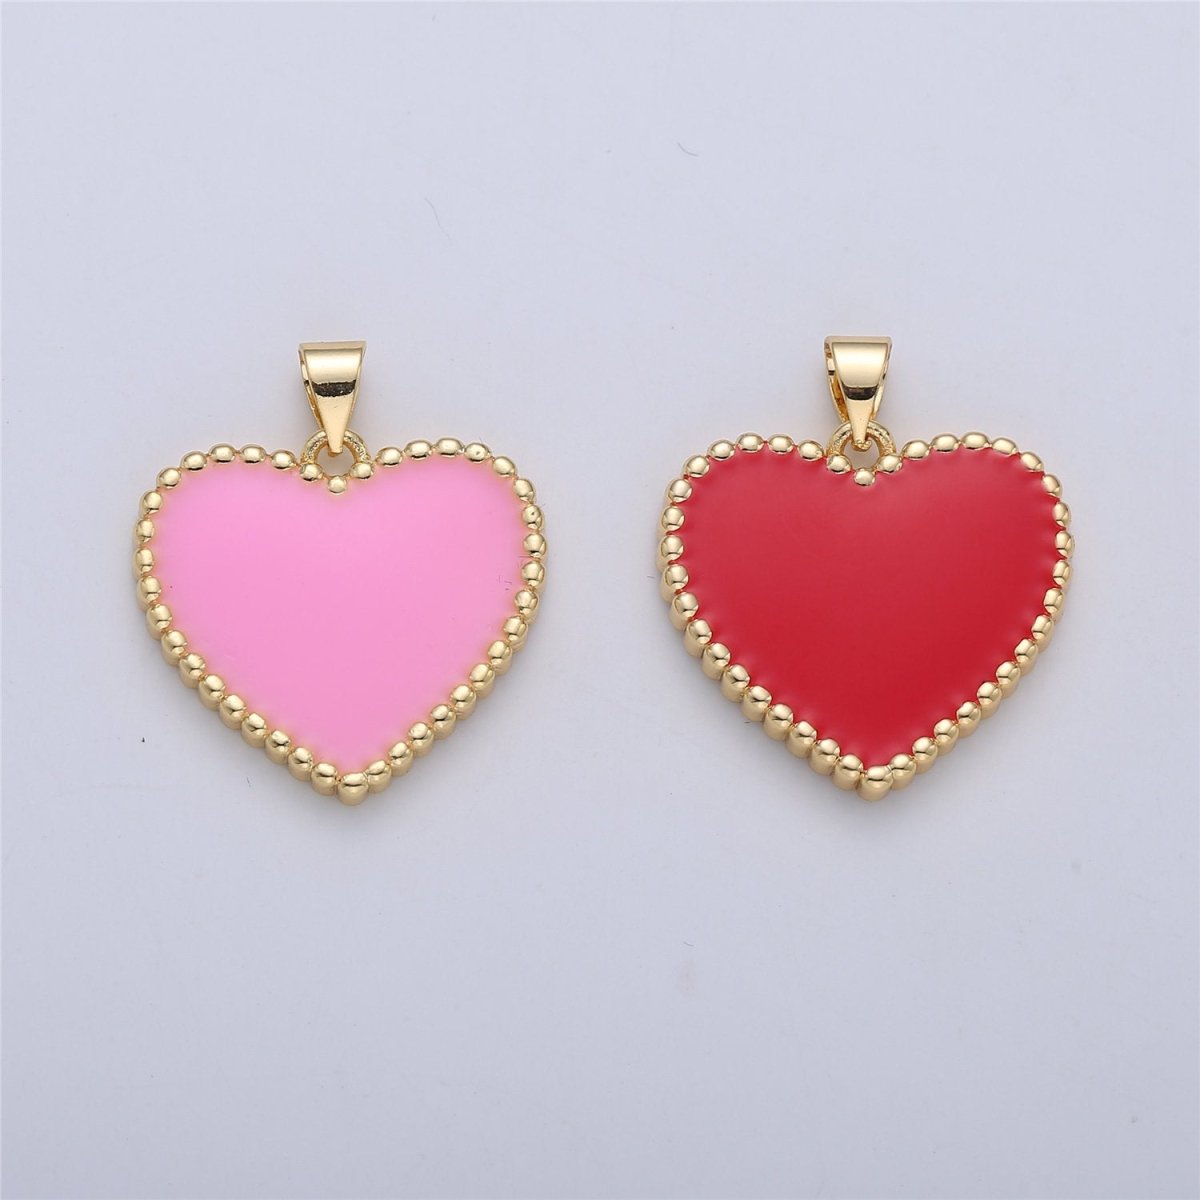 Red Pink Enamel Heart Pendant Charm, Enamel Heart Charm, Heart Pendant, Dainty Heart Necklace Pendant I-167 - DLUXCA